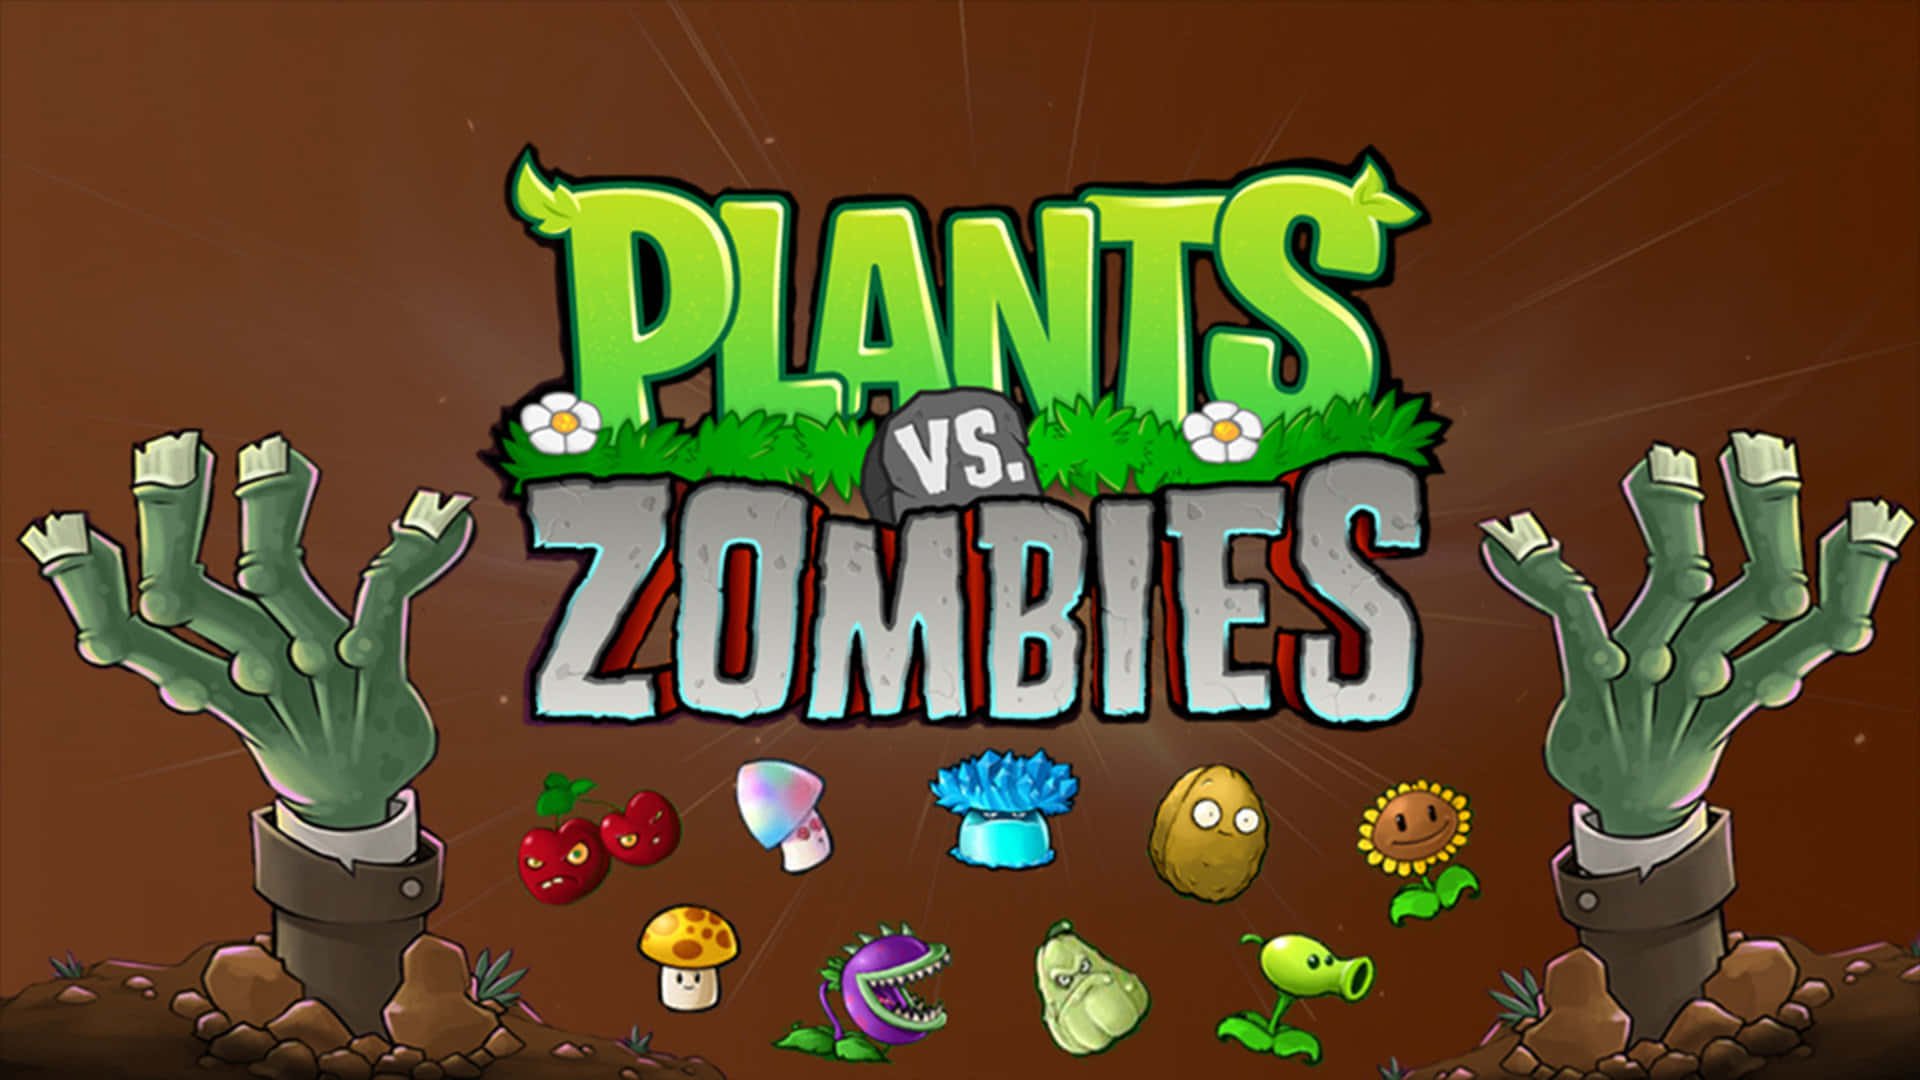 Plants va zombies. Plants vs. Zombies 1 1600х400. PVZ главное меню. Растения против зомби главное меню. Растения против зомби 2 обои.